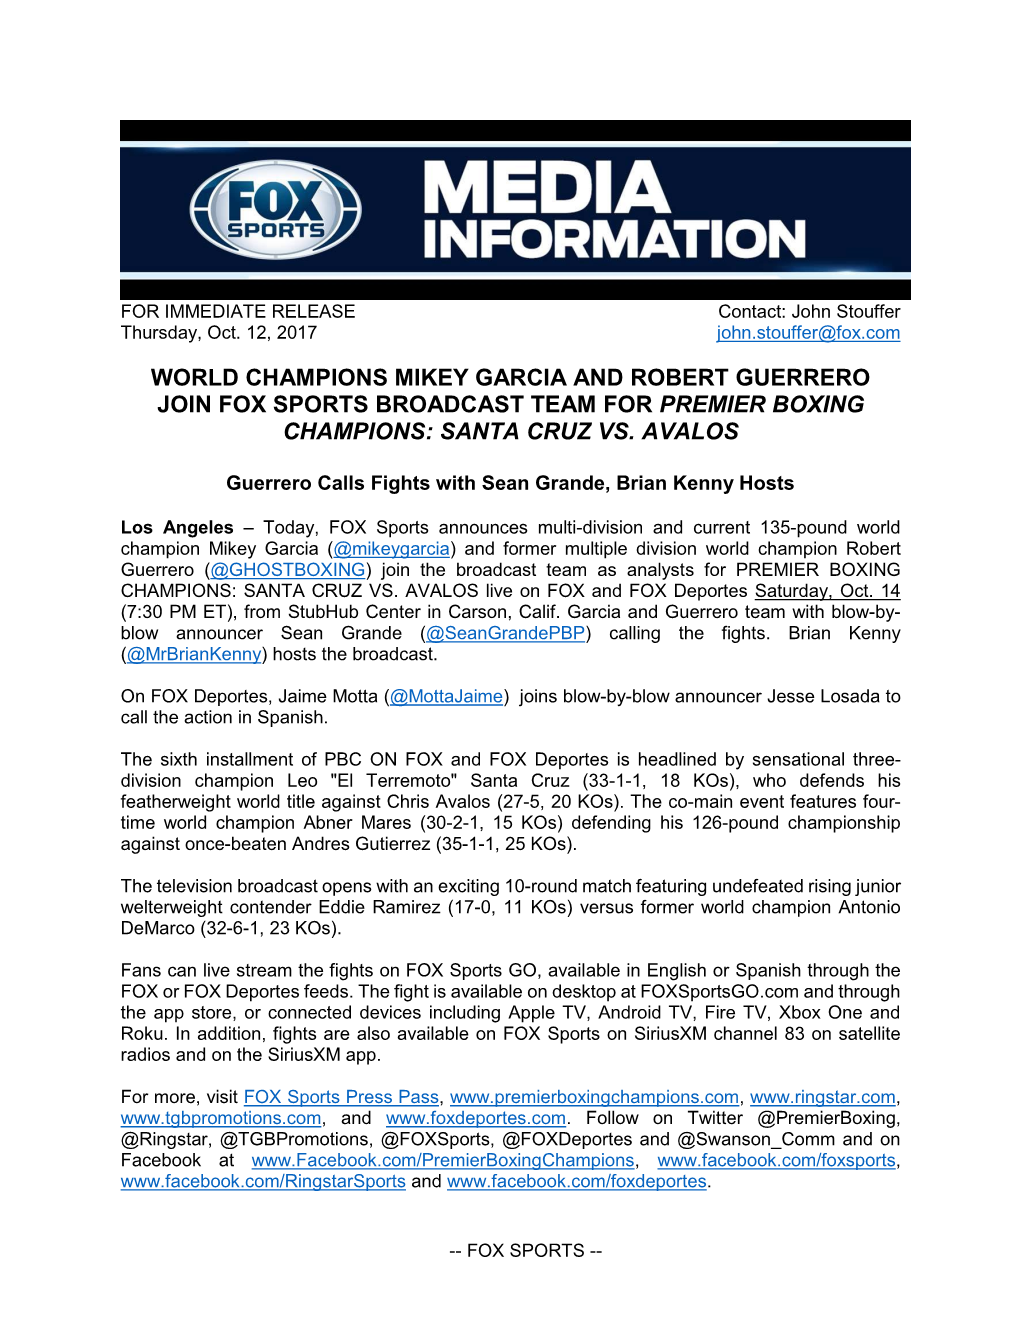 World Champions Mikey Garcia and Robert Guerrero Join Fox Sports Broadcast Team for Premier Boxing Champions: Santa Cruz Vs. Avalos